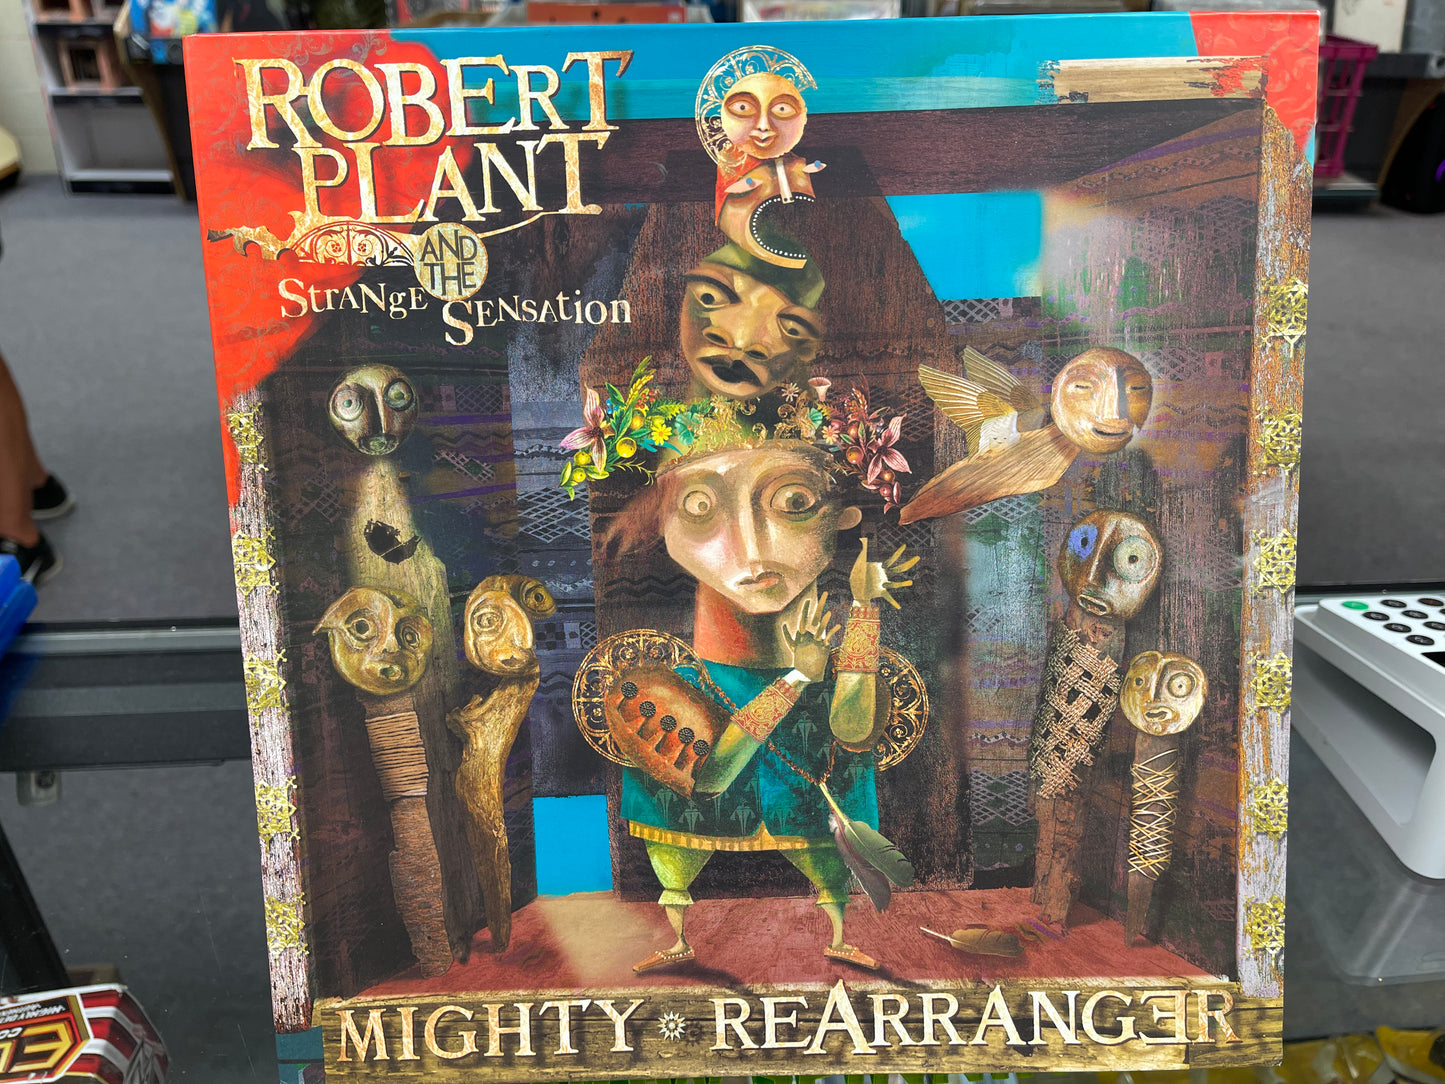 Robert Plant and the Strange Sensation - Mighty ReArranger